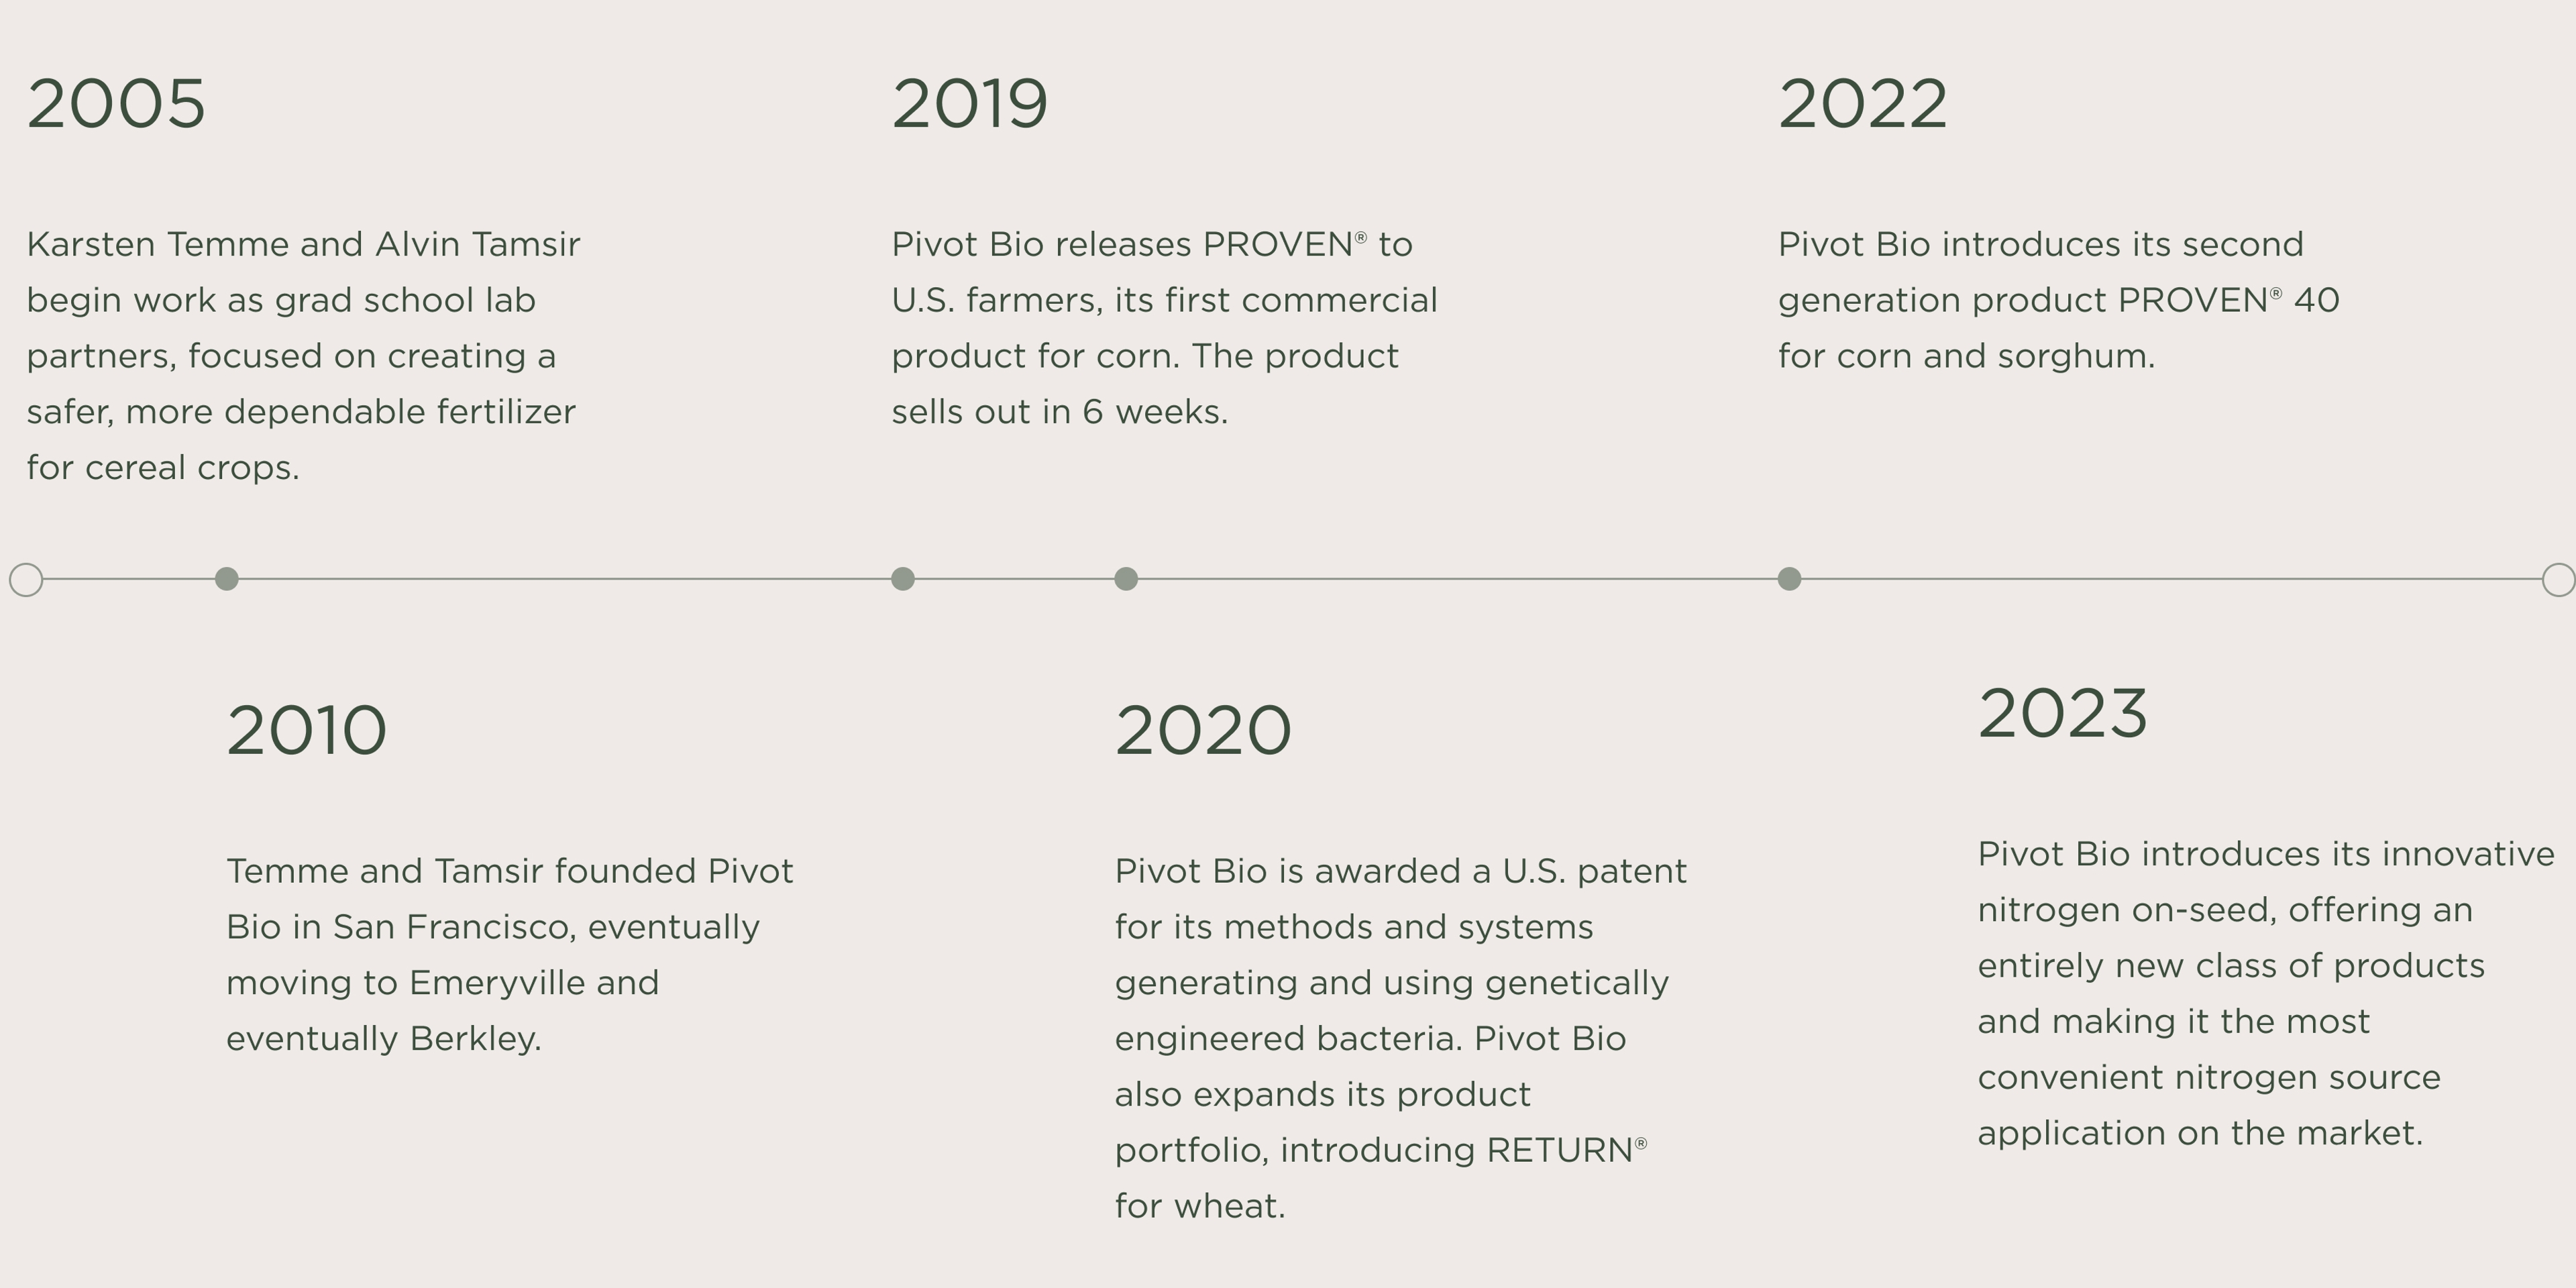 Timeline of Pivot Bio Key Milestones